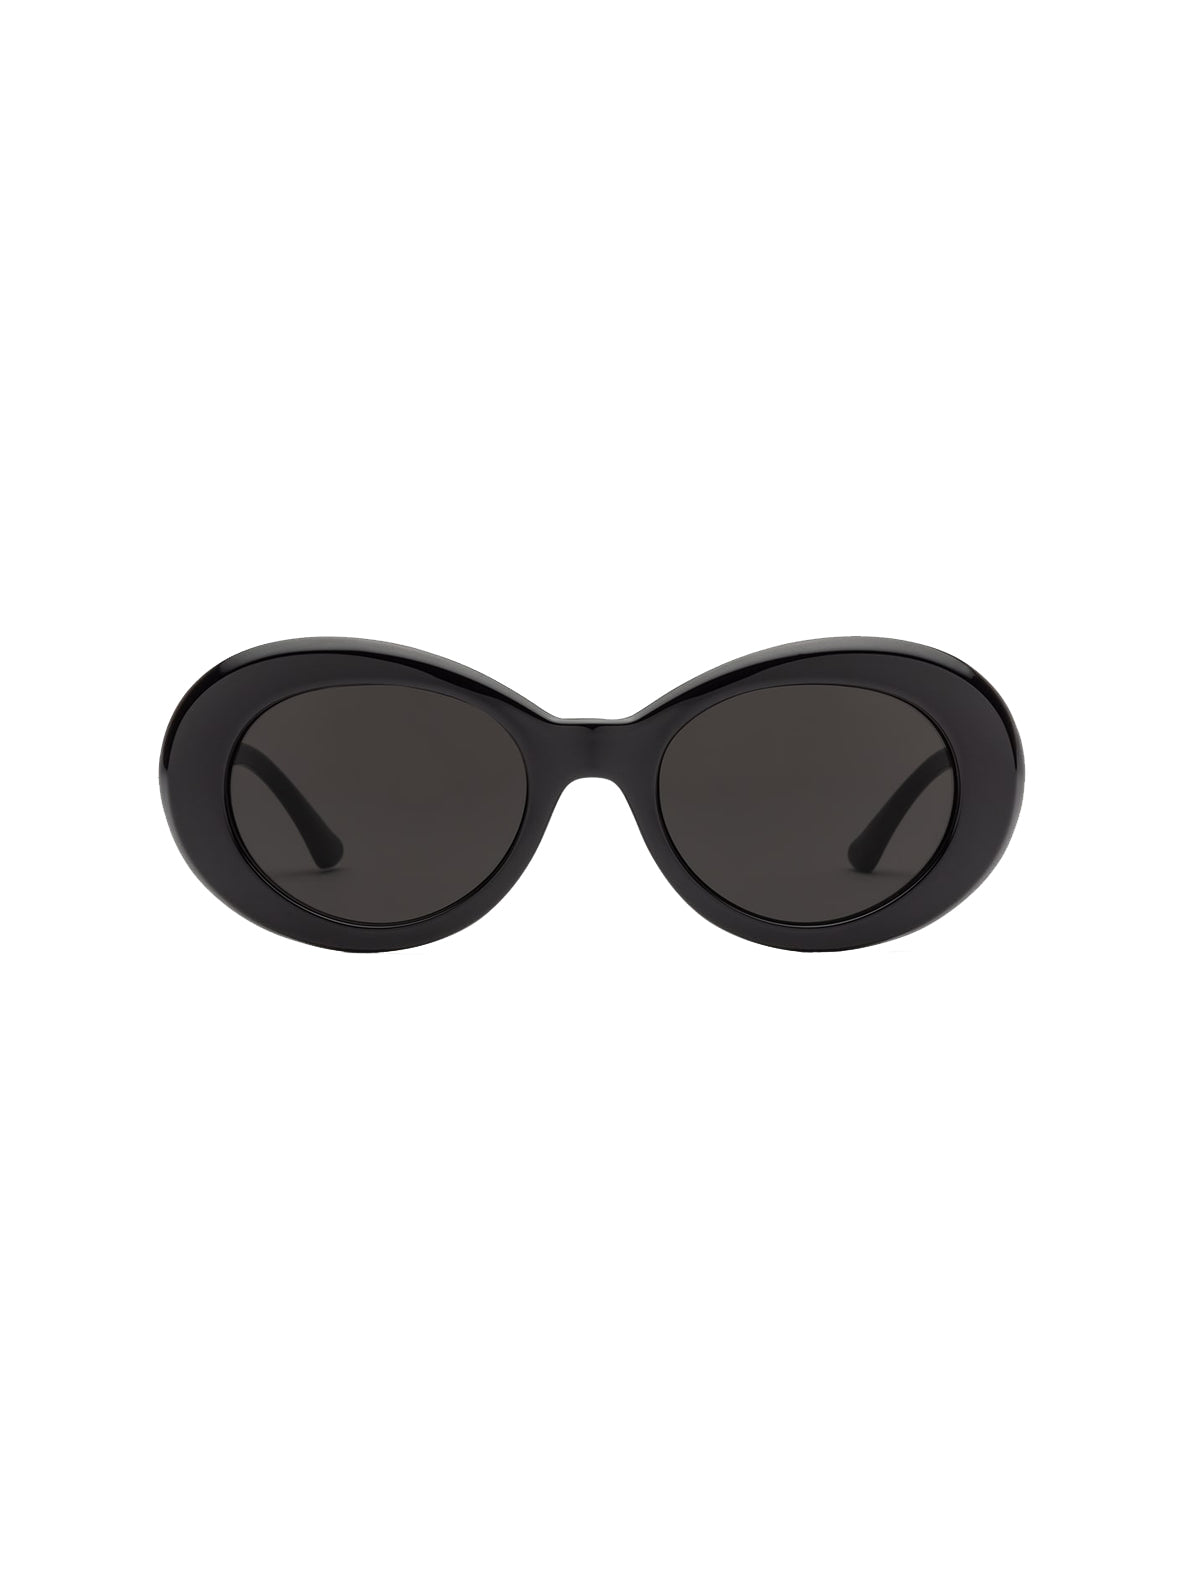 Volcom Stoned Sunglasses